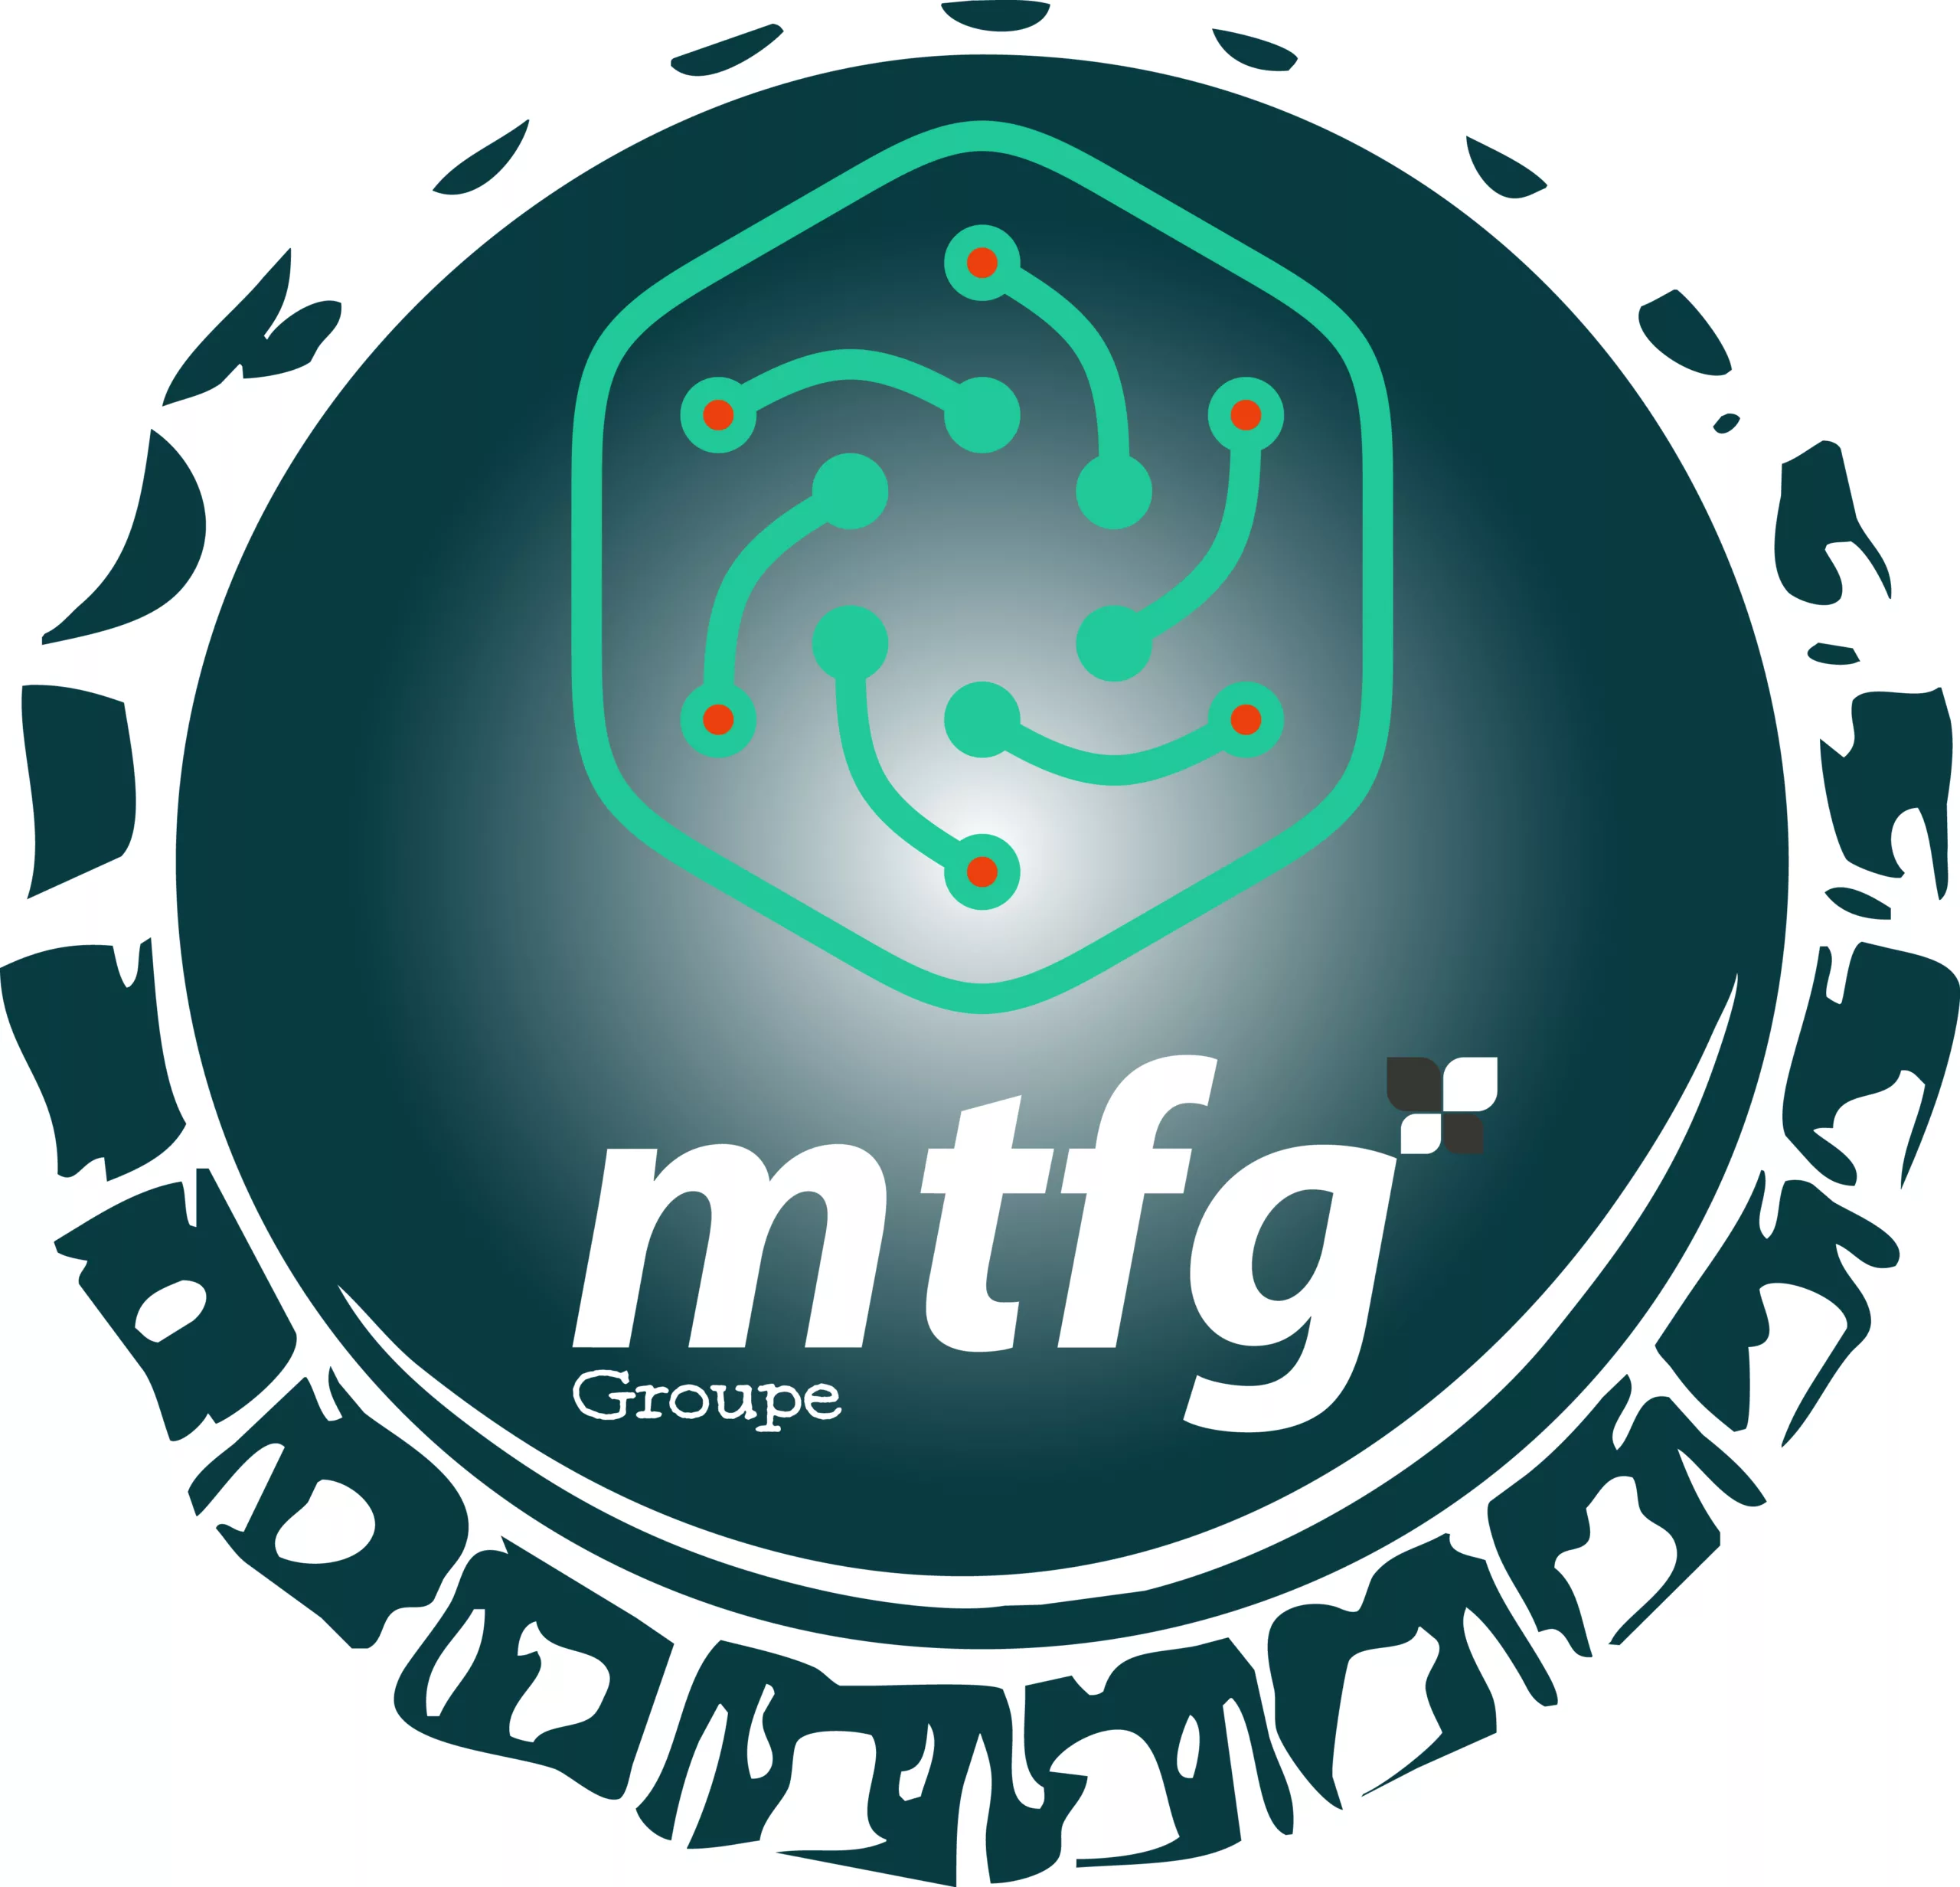 MTFG Groupe